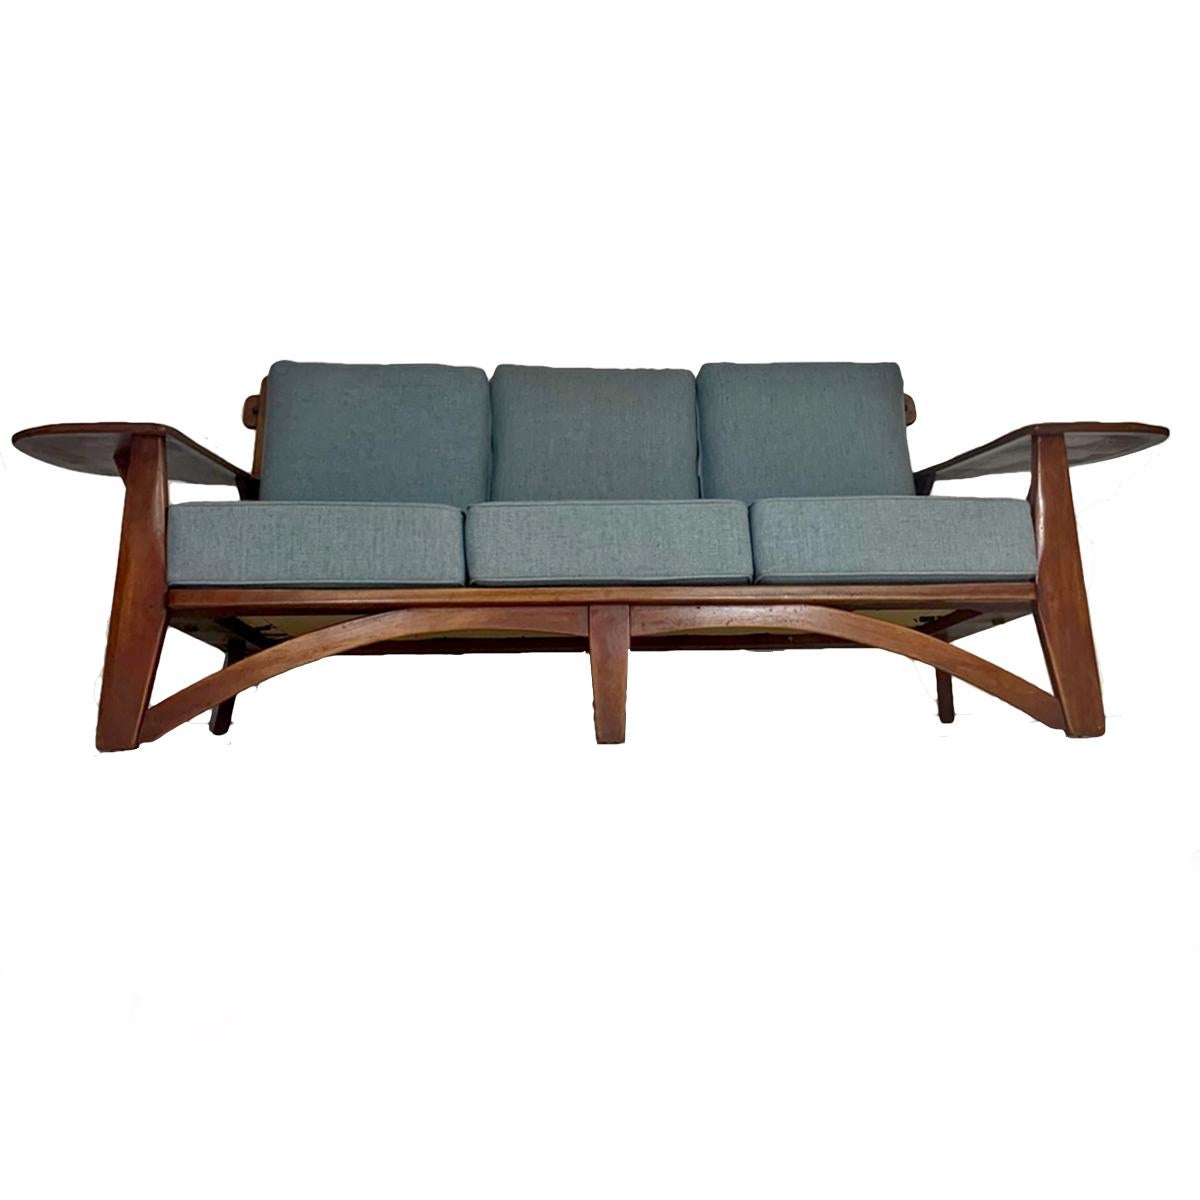 American Impressive 1930s Cushman Maple Paddle Arm Sofa Designed by William DeVries